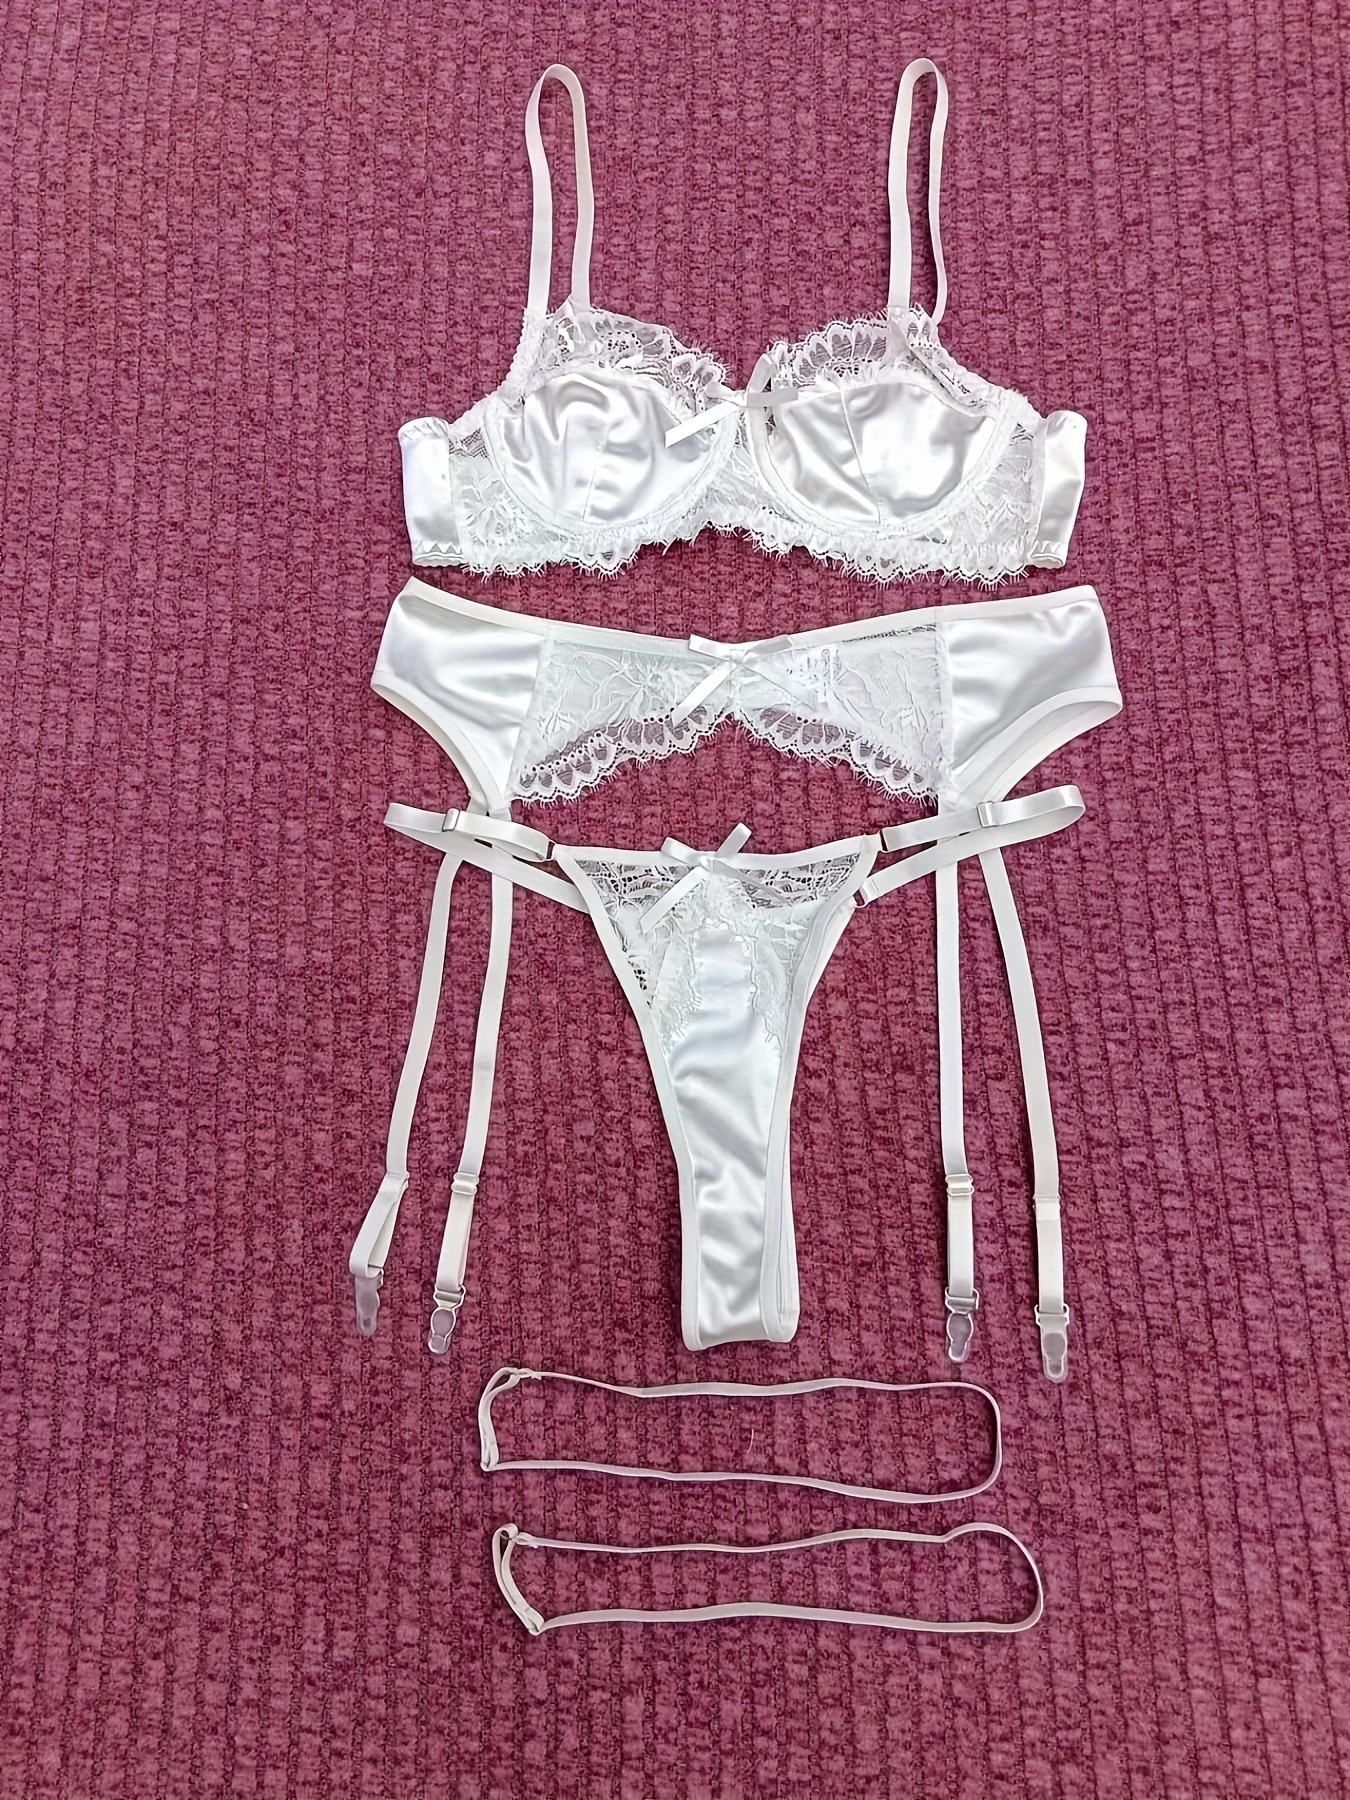 Solid Satin Lingerie Set, Cut Out Intimates Bra & Garter Belt & Thong,  Women's Sexy Lingerie & Underwear